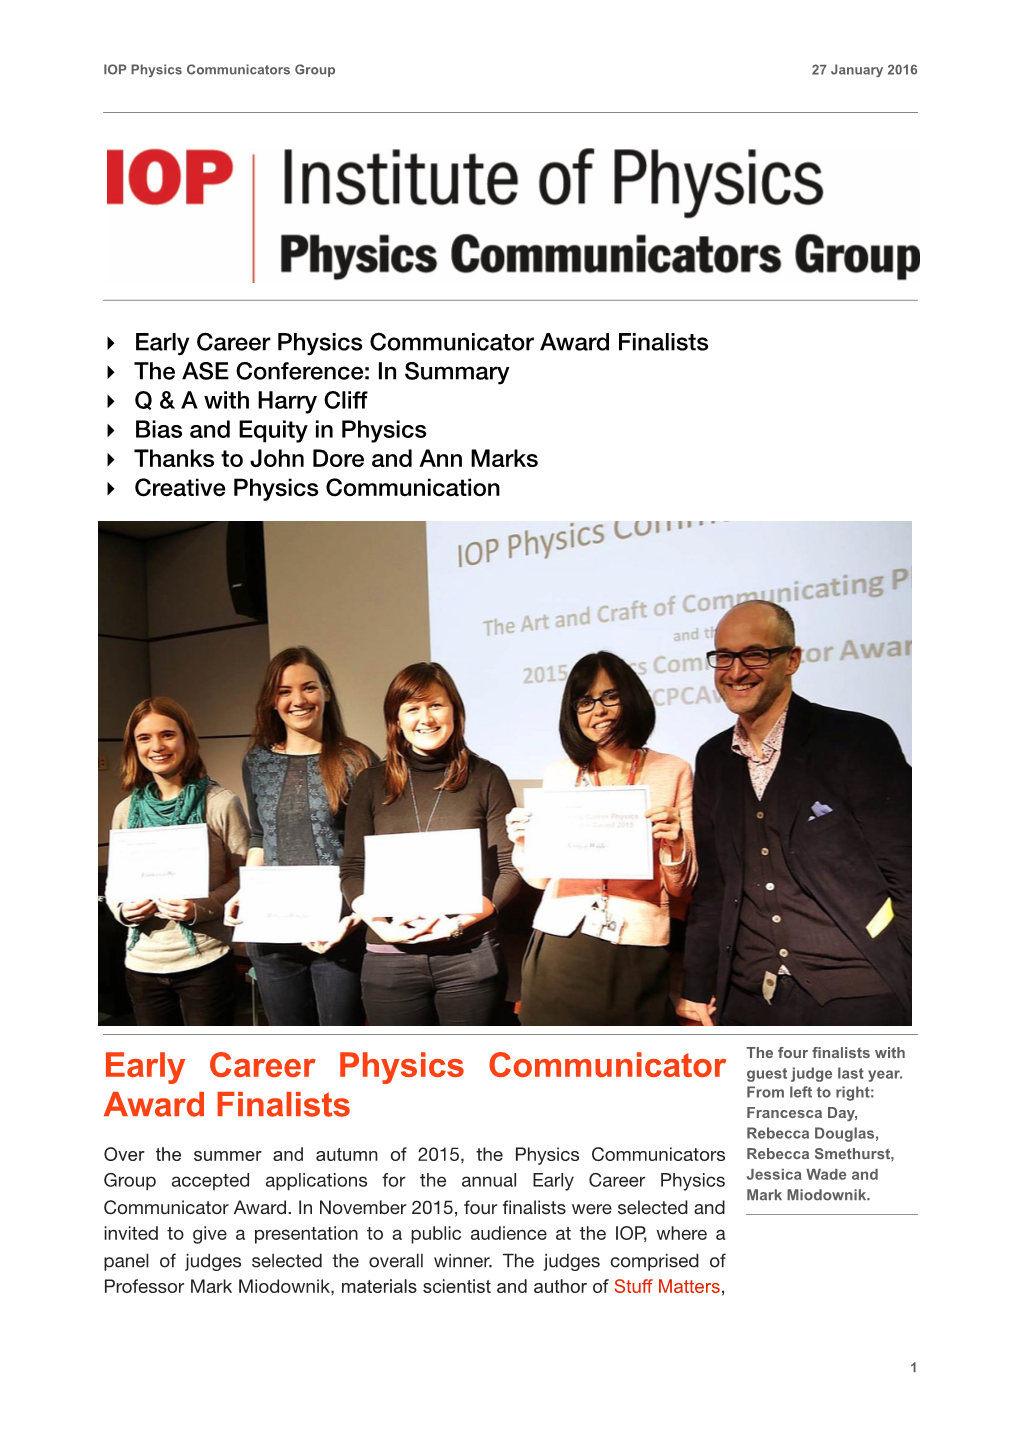 Early Career Physics Communicator Award Finalists